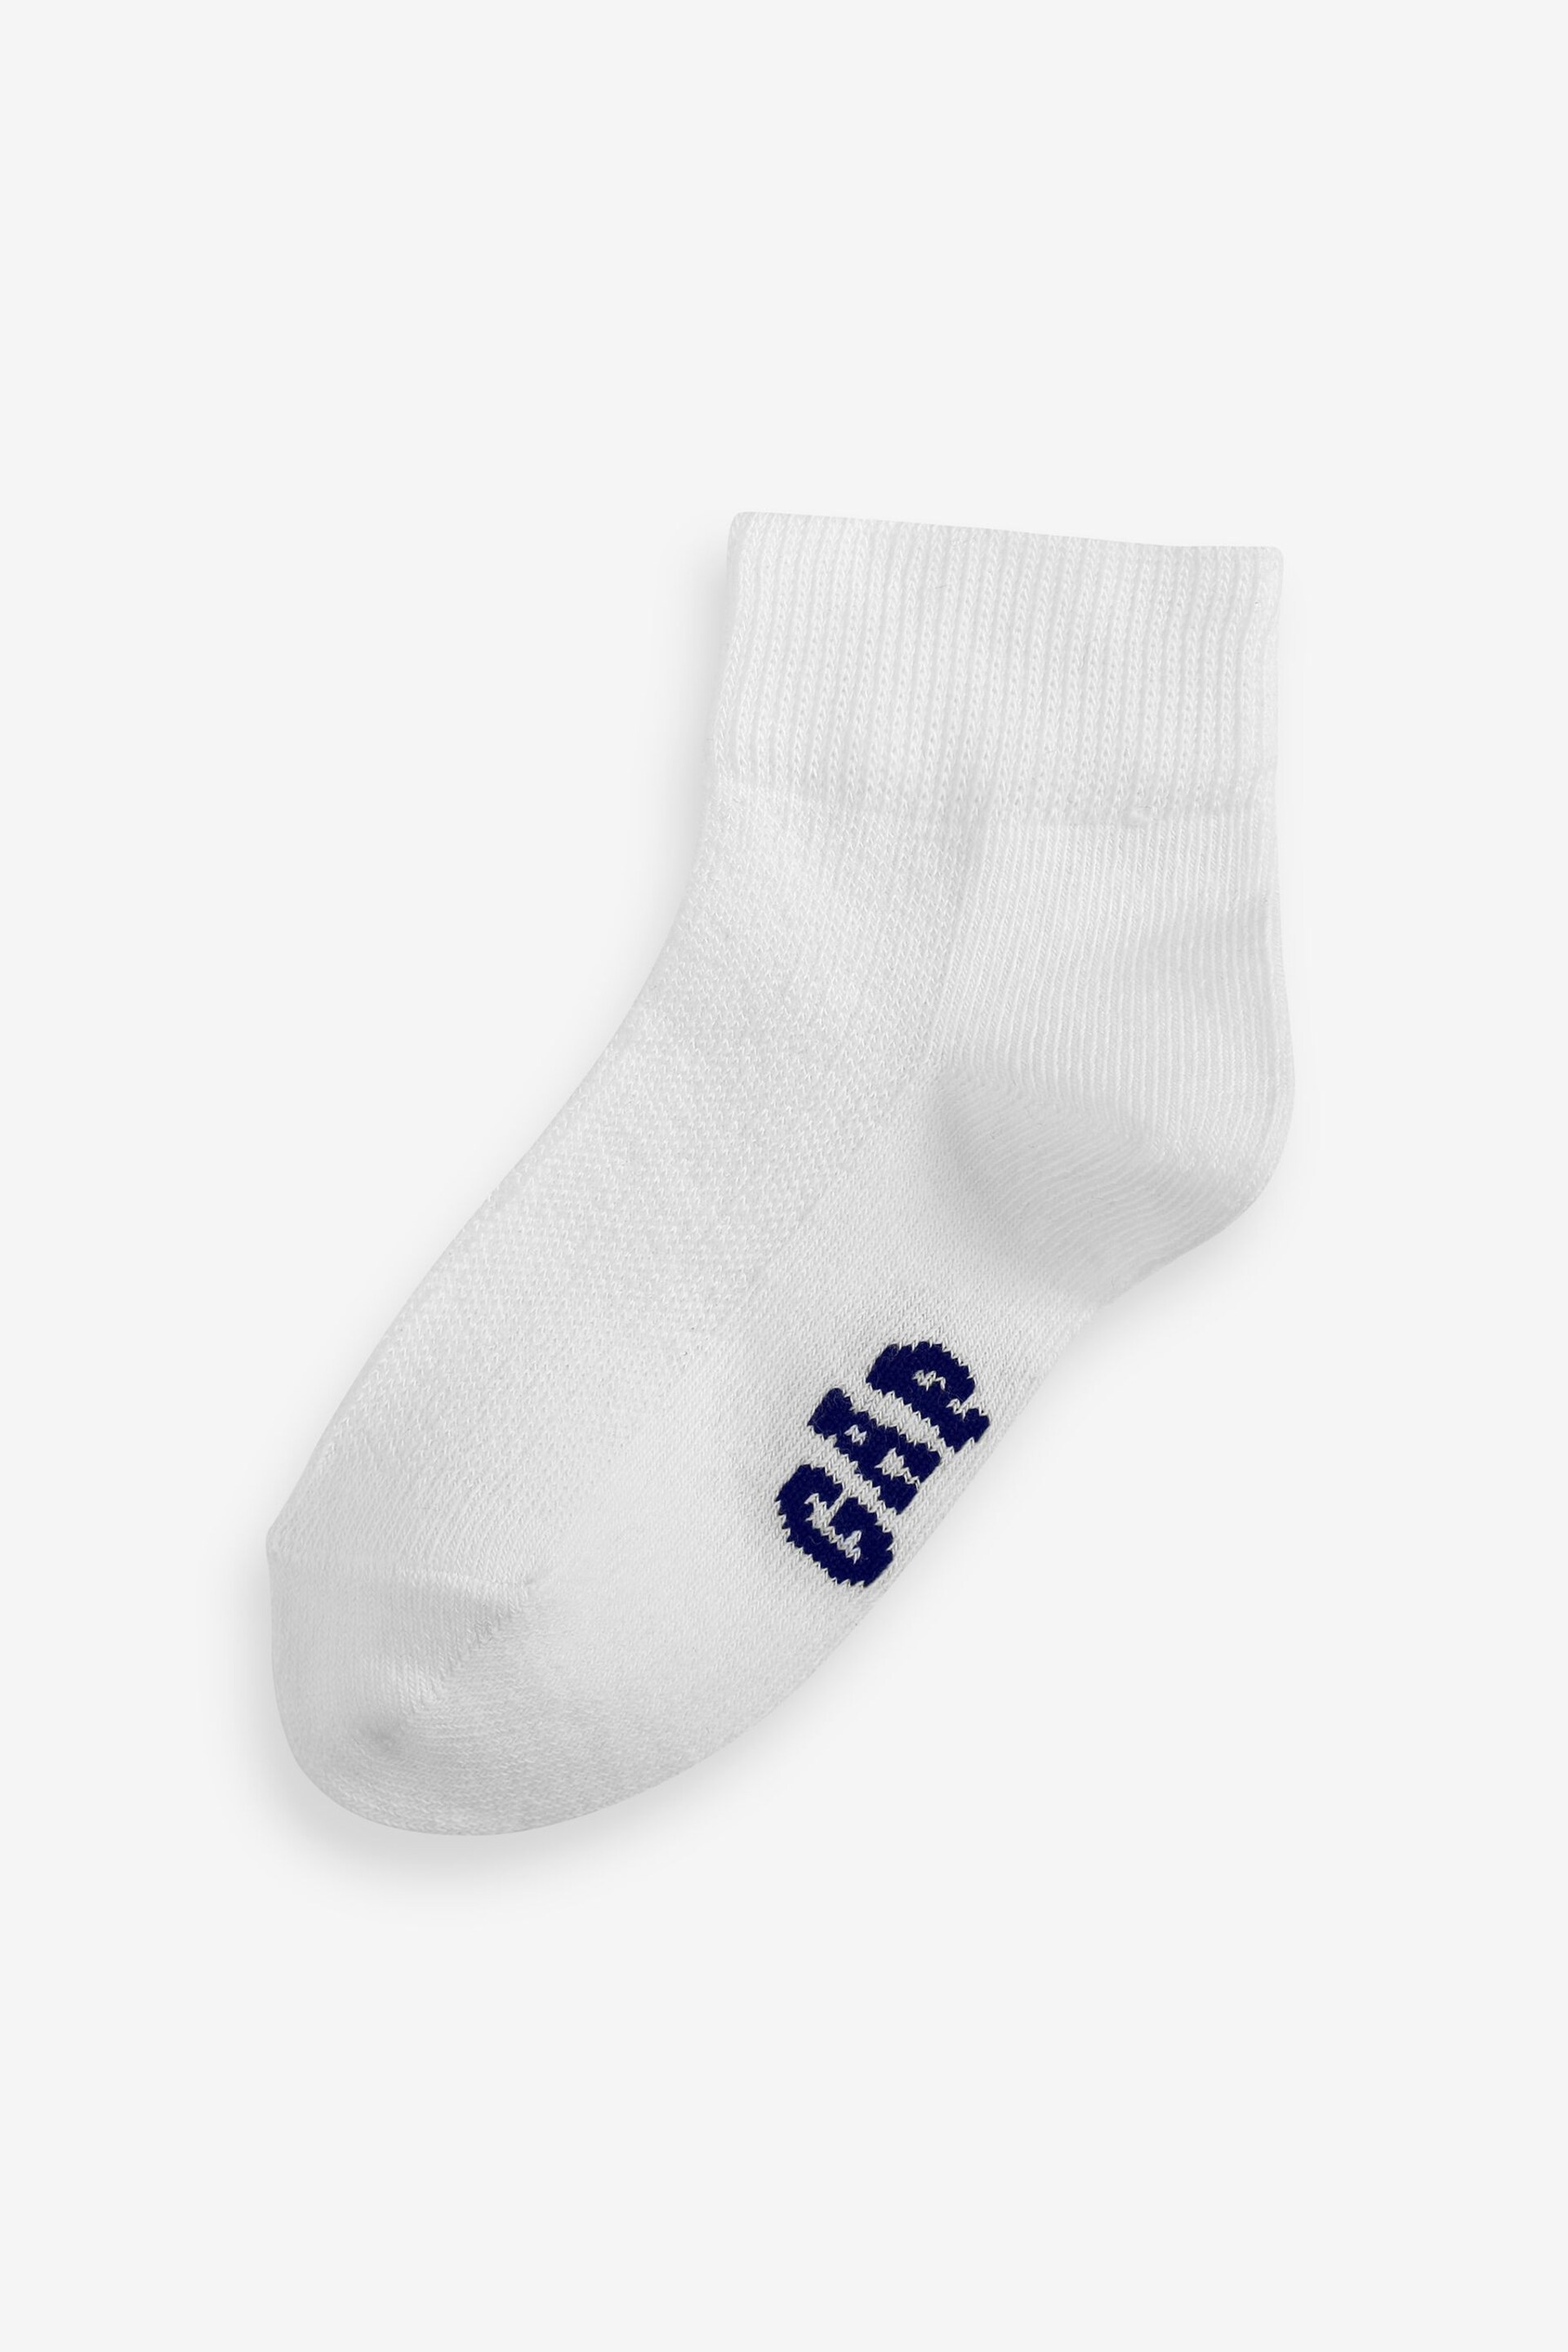 Gap Grey Kids Logo Quarter Crew Socks 3 Pack - Image 2 of 4